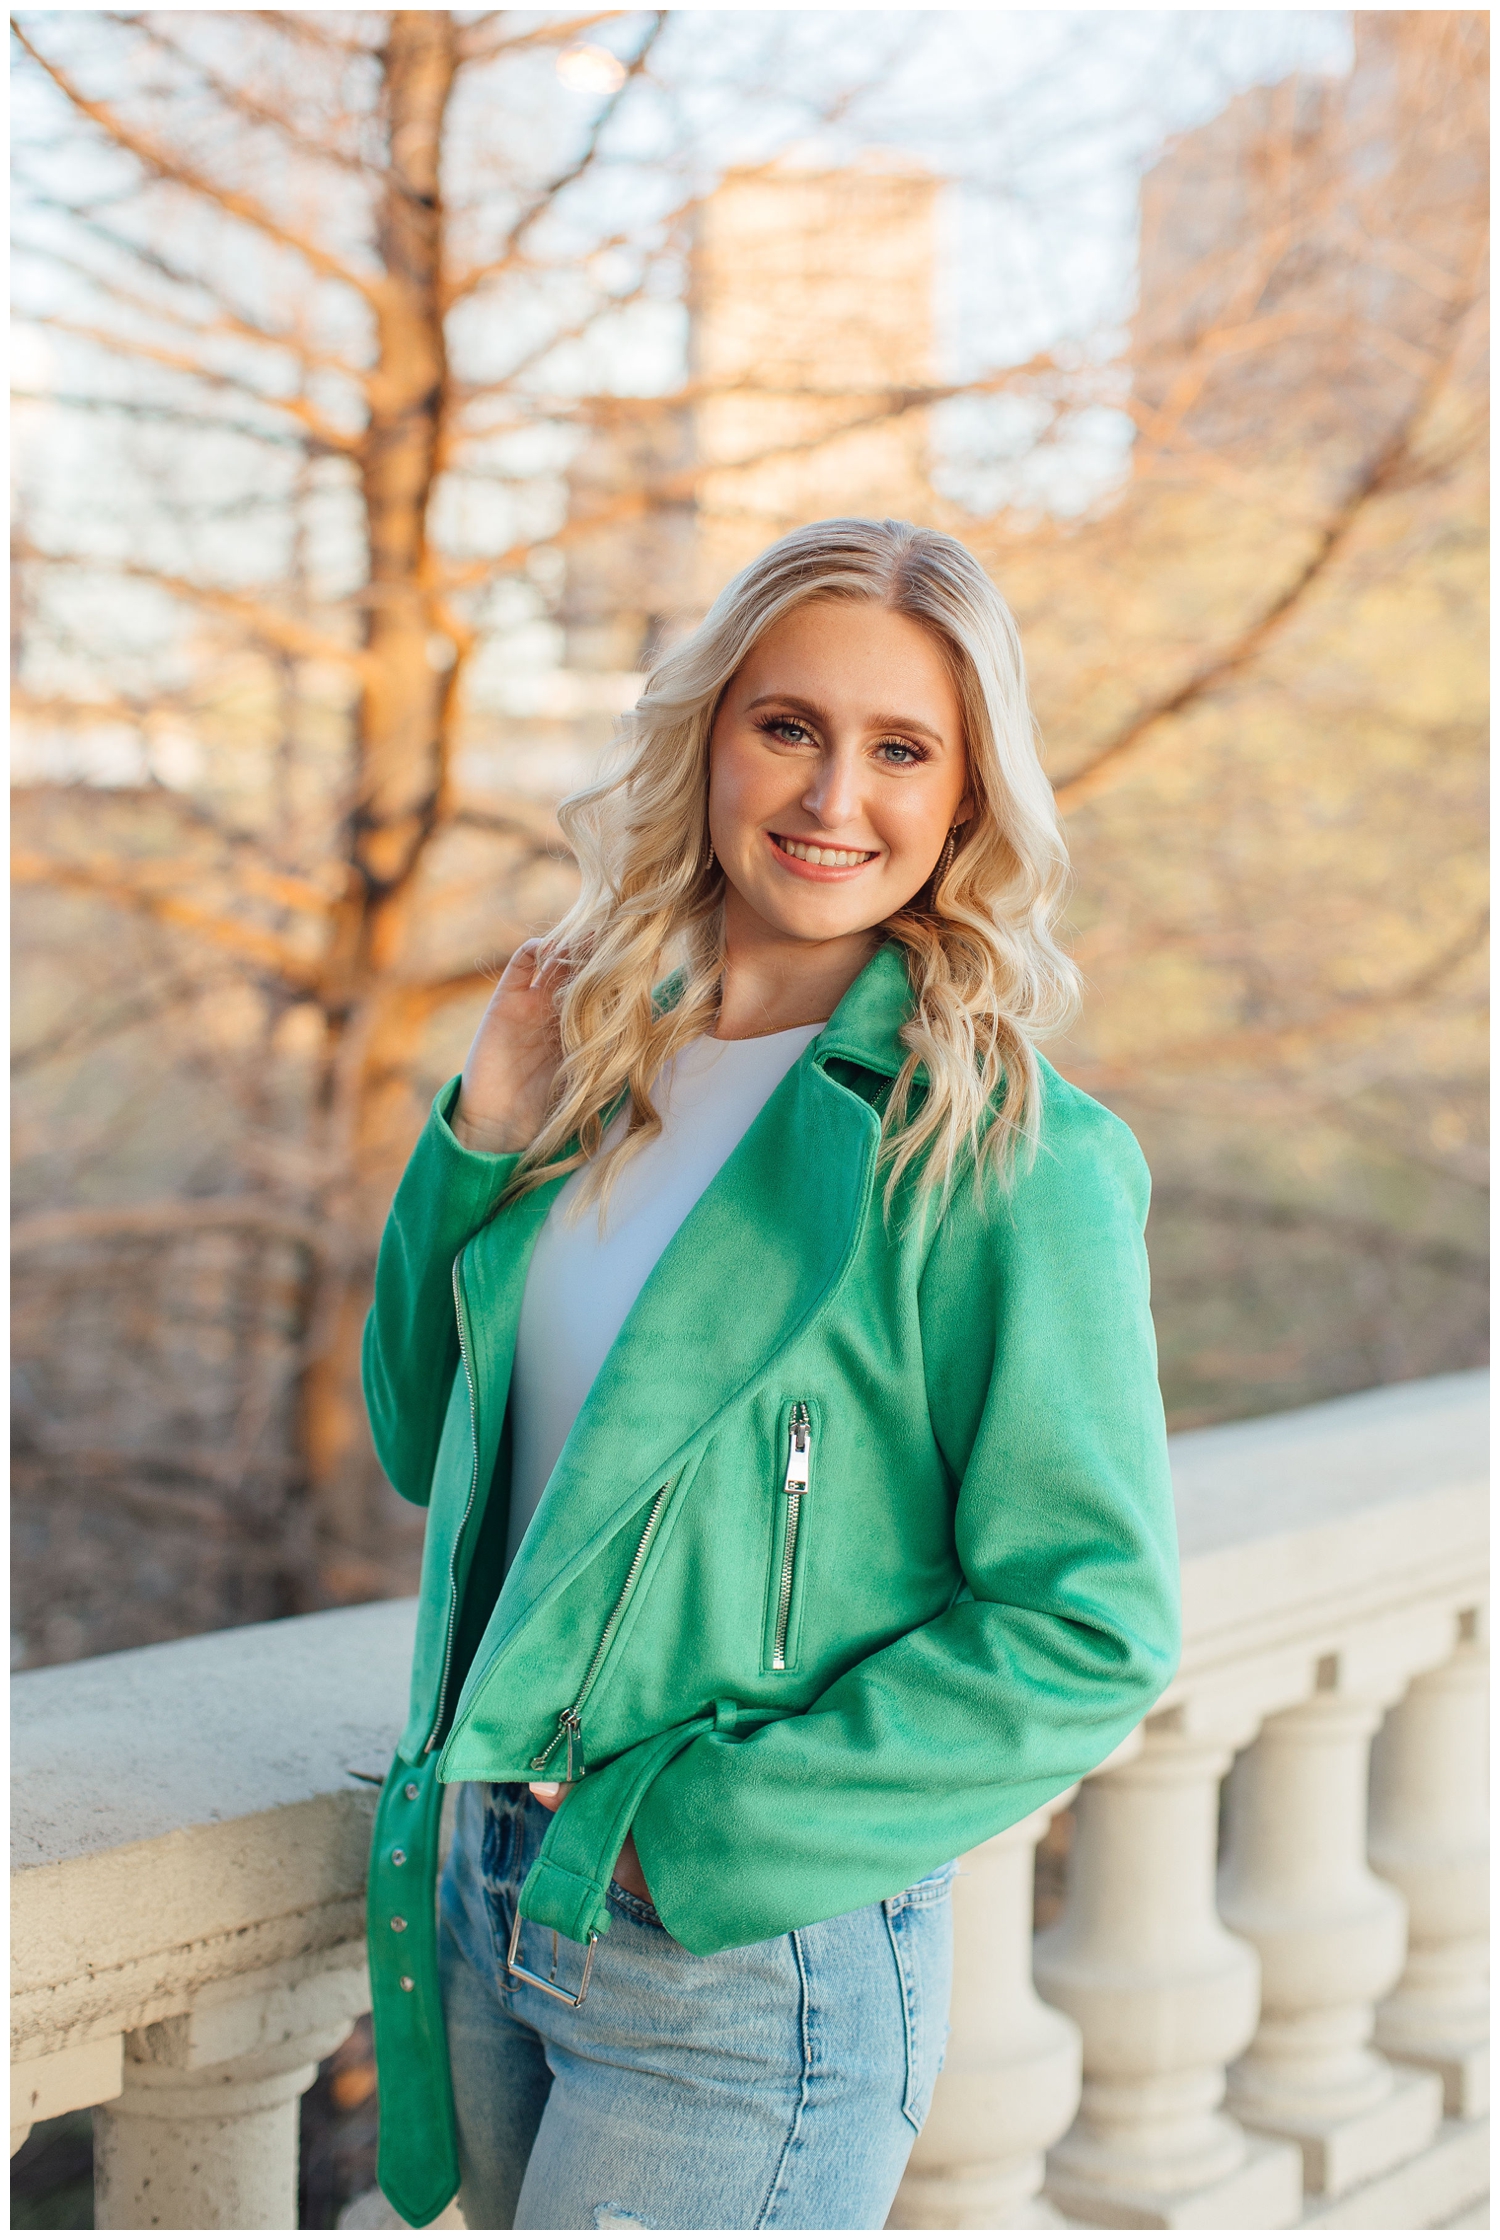 Houston high school senior wearing bright green jacket posing with hand in hair on Sabine Street Bridge